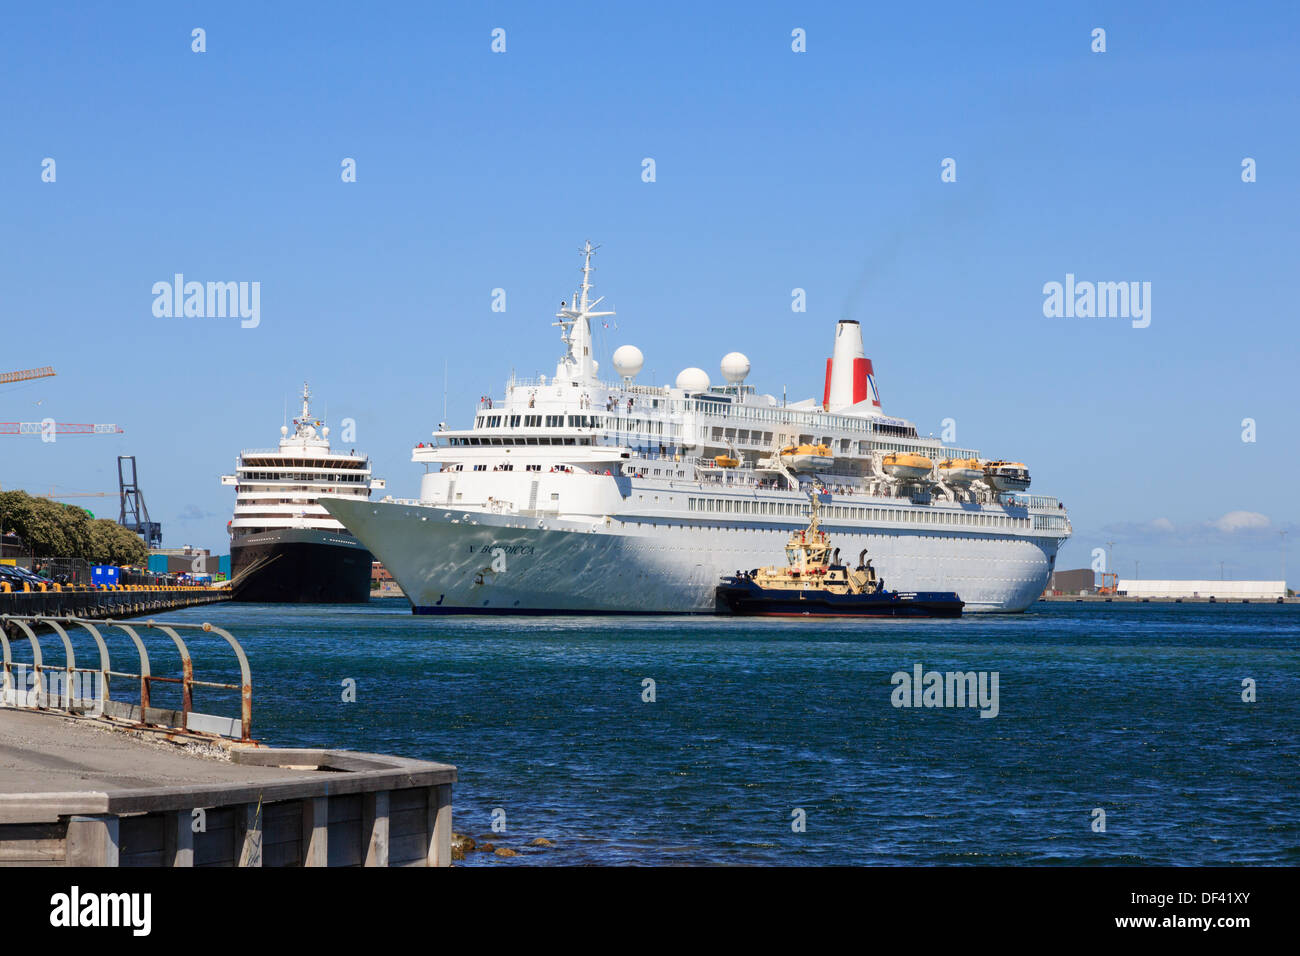 Fred Olsen cruise ship Boudicca docked in the harbour at Langelinie Pier, Copenhagen, Zealand, Denmark, Scandinavia Stock Photo